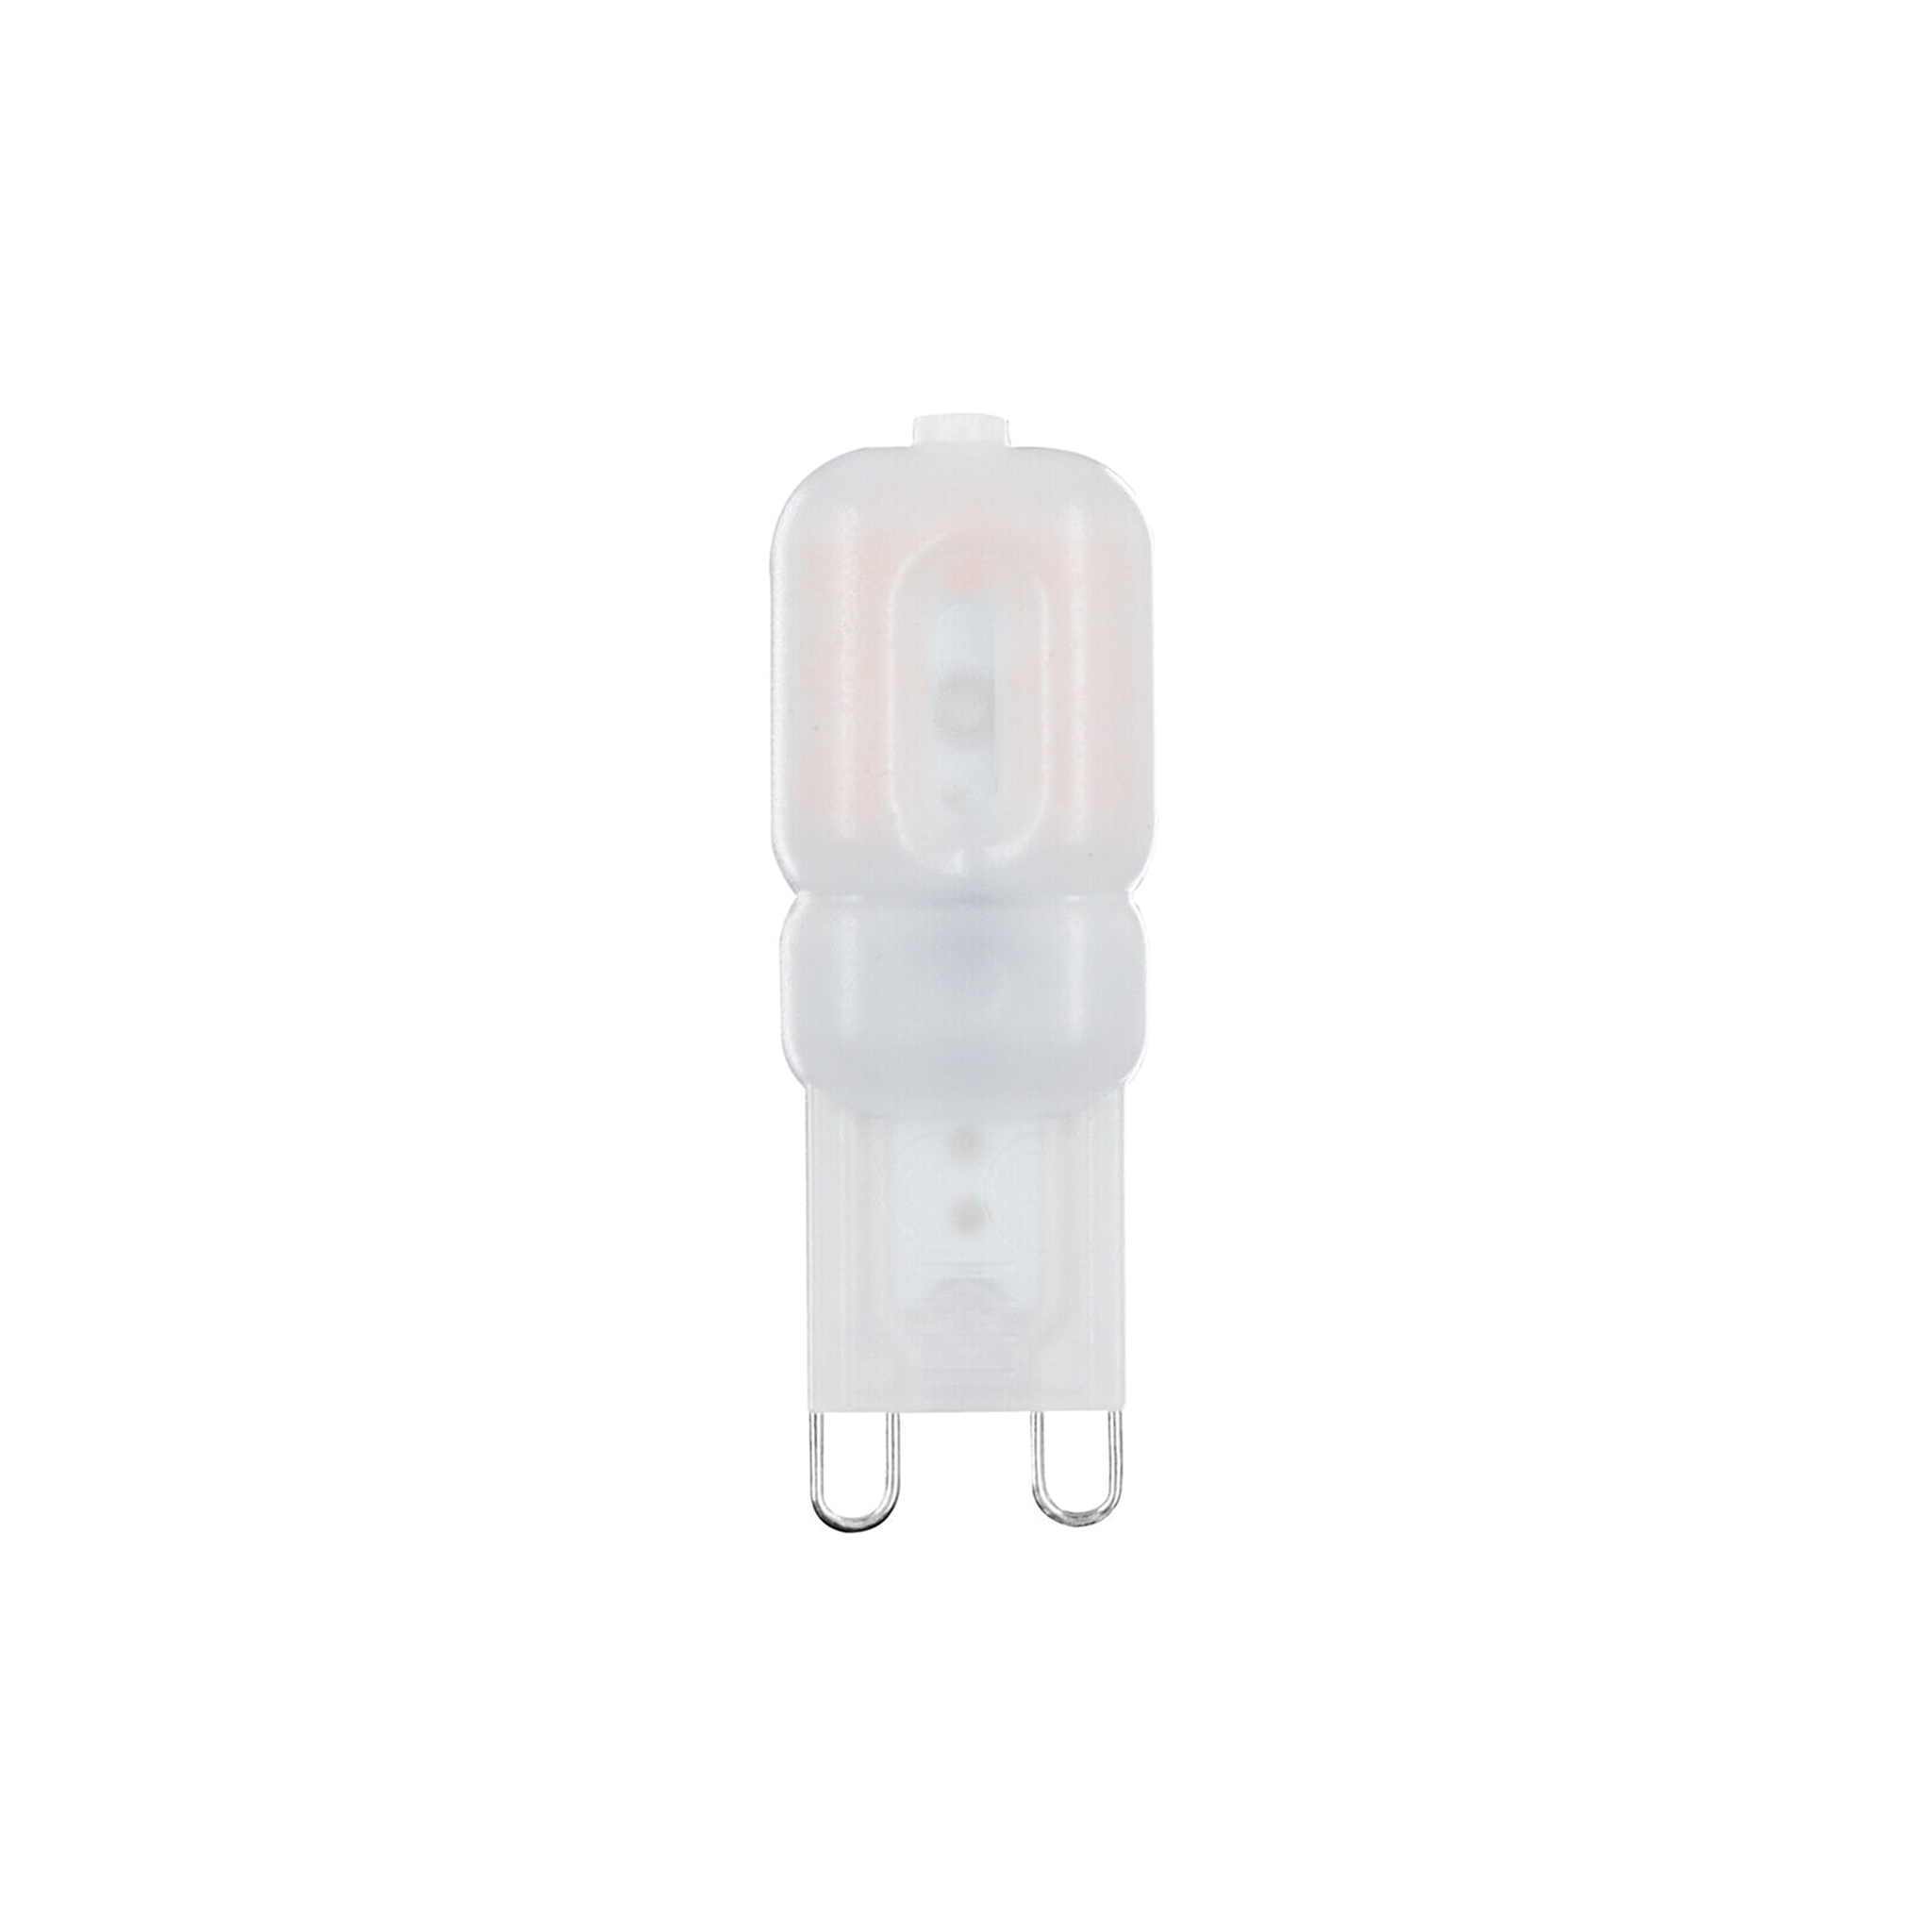 LED-lampa Airam G9 - 2700K / 2.5 W, 2 st